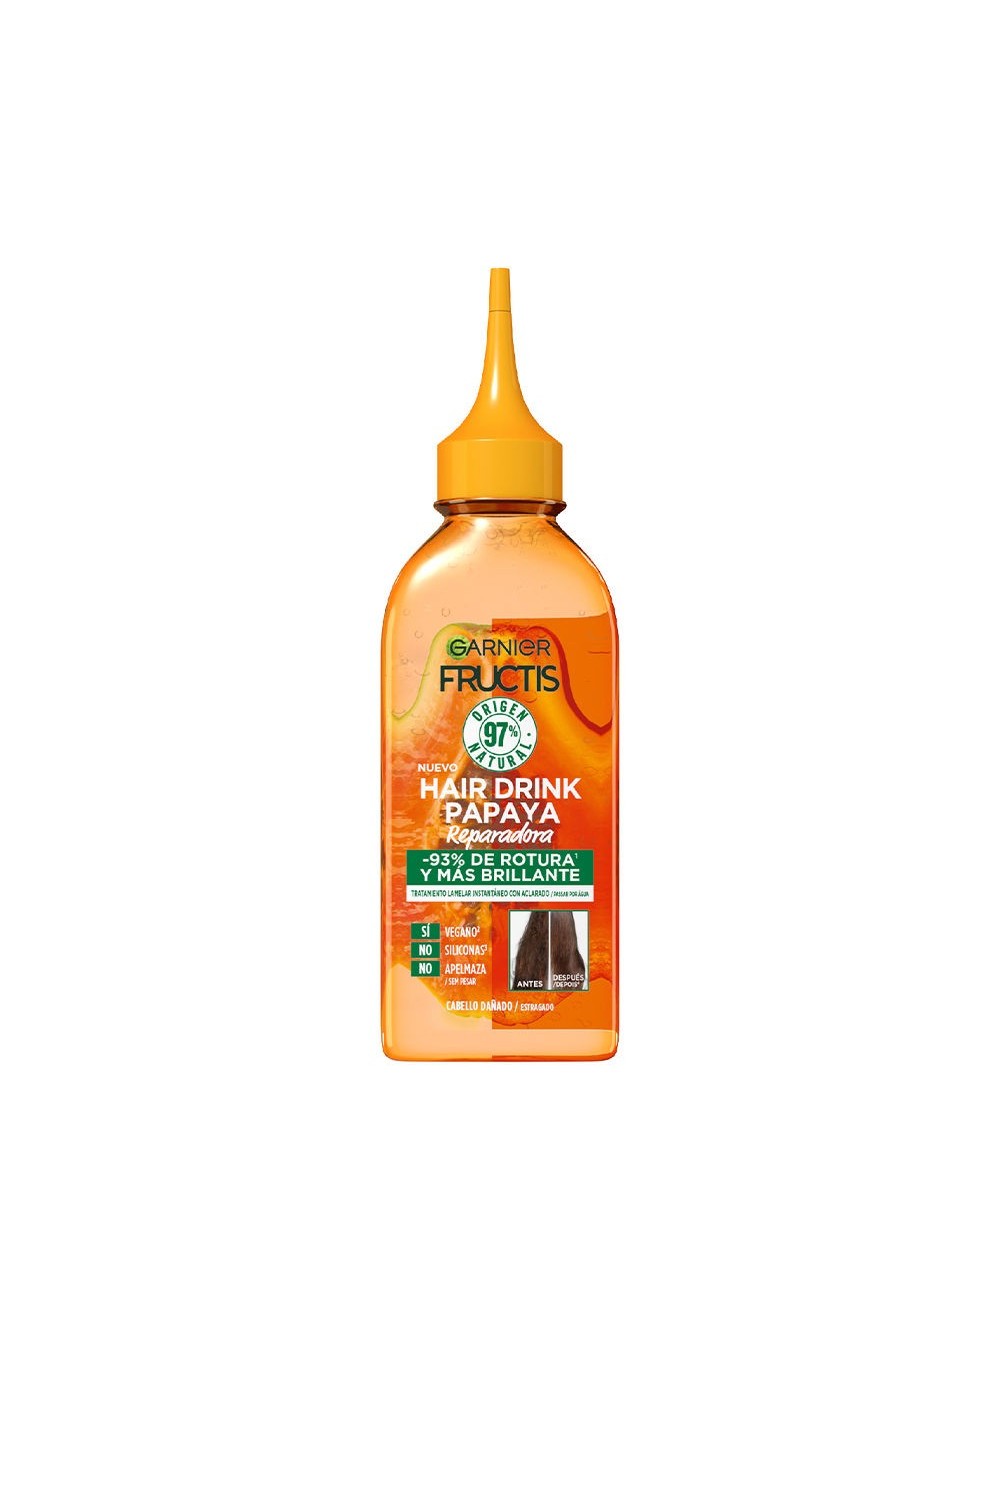 Garnier Fructis Hair Drink Papaya Tratamiento Reparadora 200ml